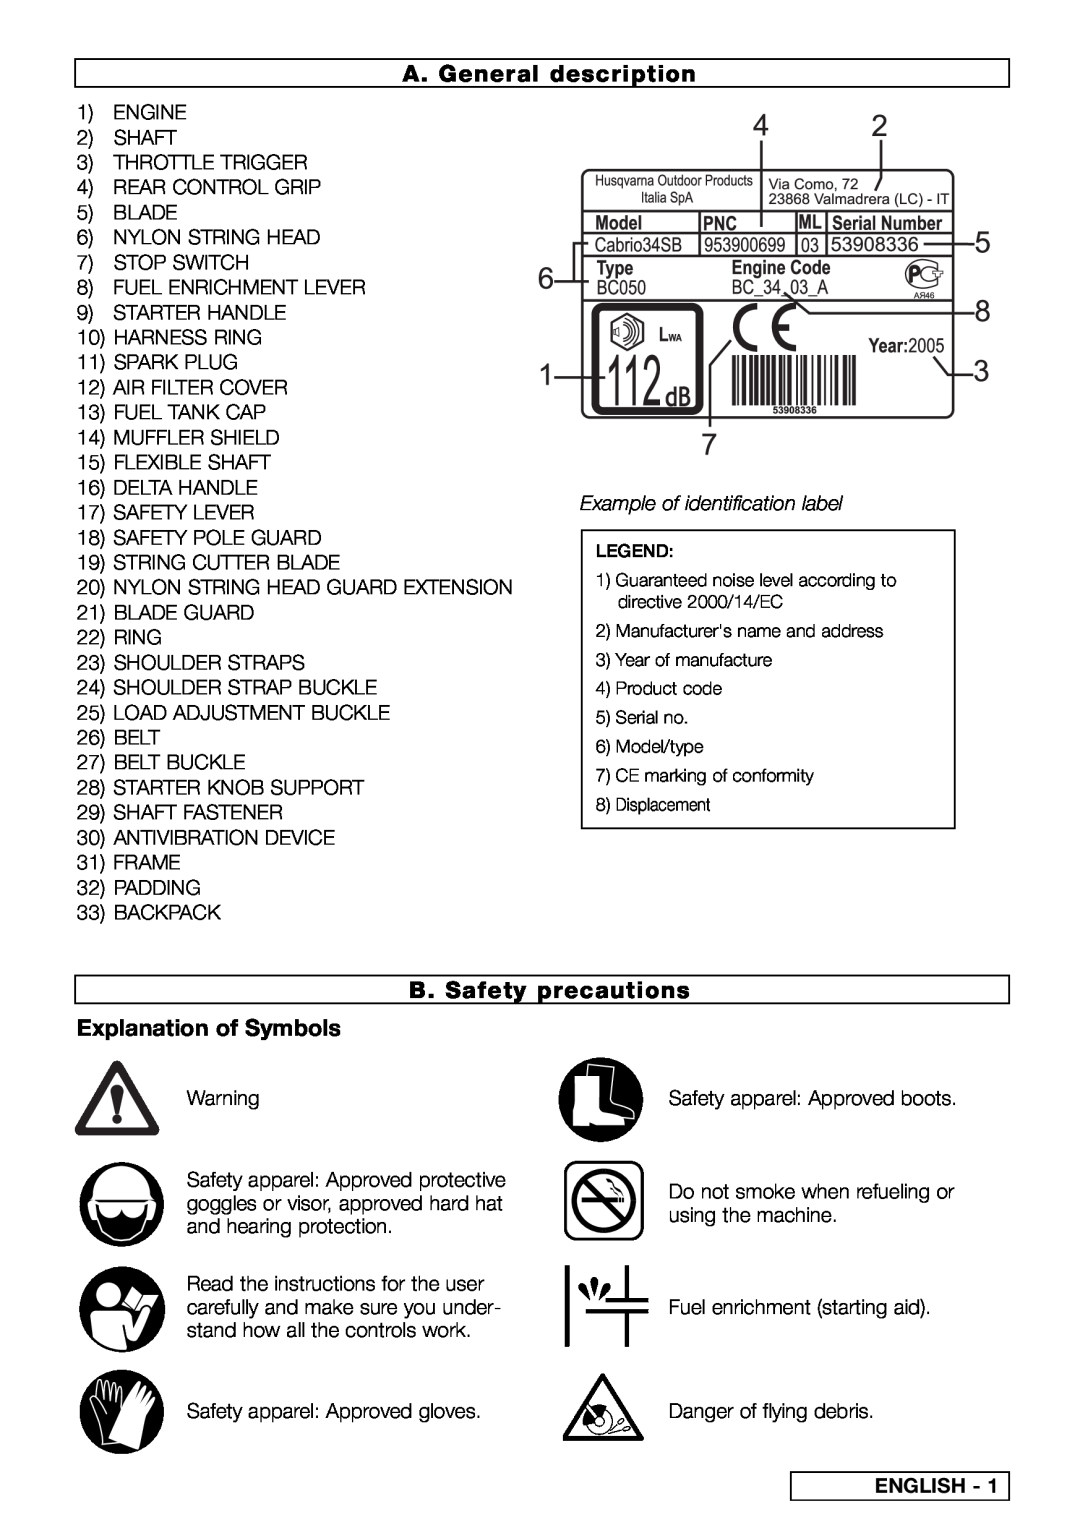 Husqvarna 953900791 A. General description, B. Safety precautions Explanation of Symbols, Example of identification label 